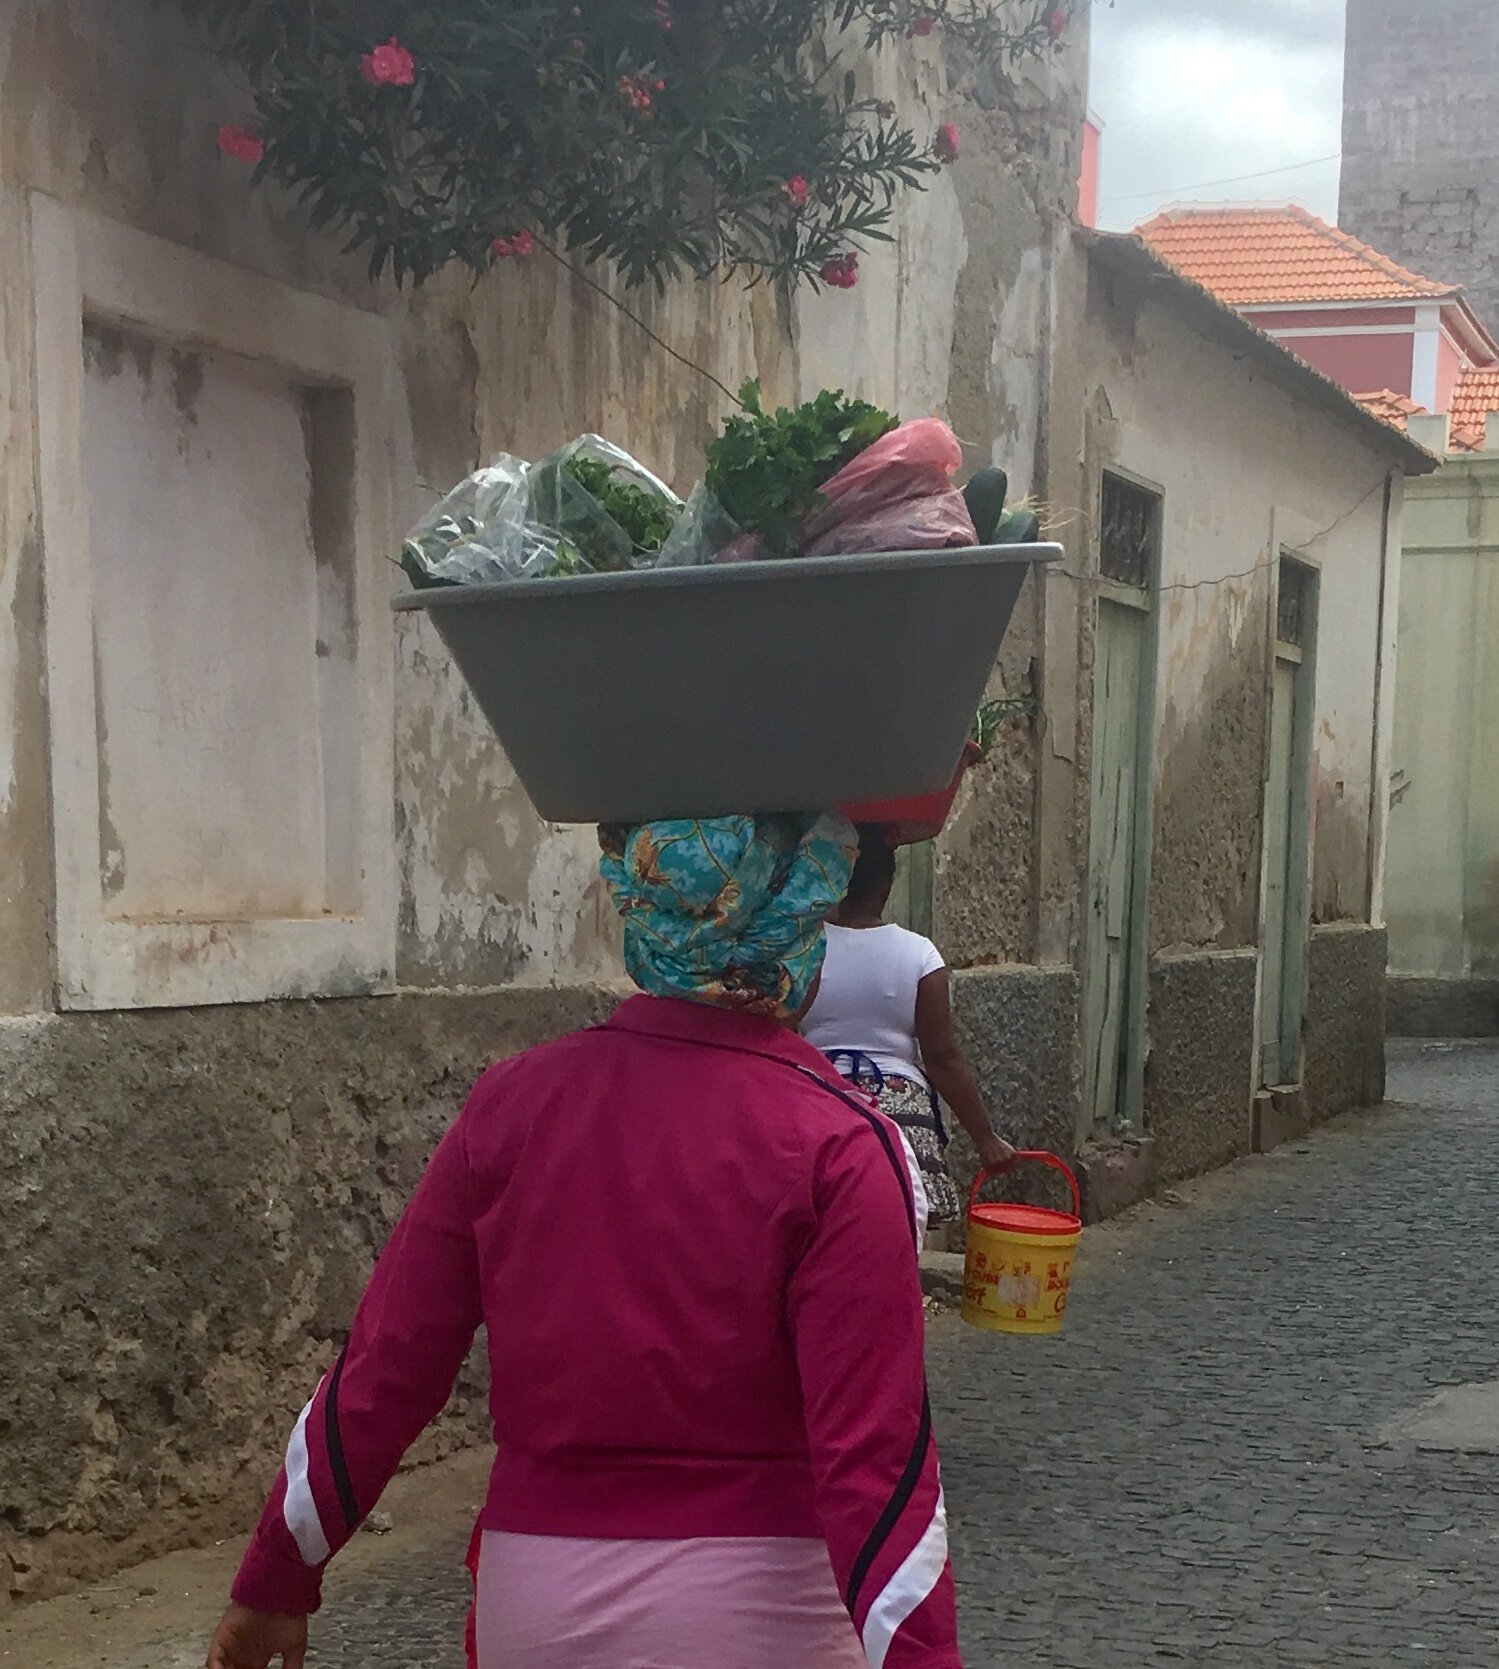 Cape Verde women carry baskets on heads